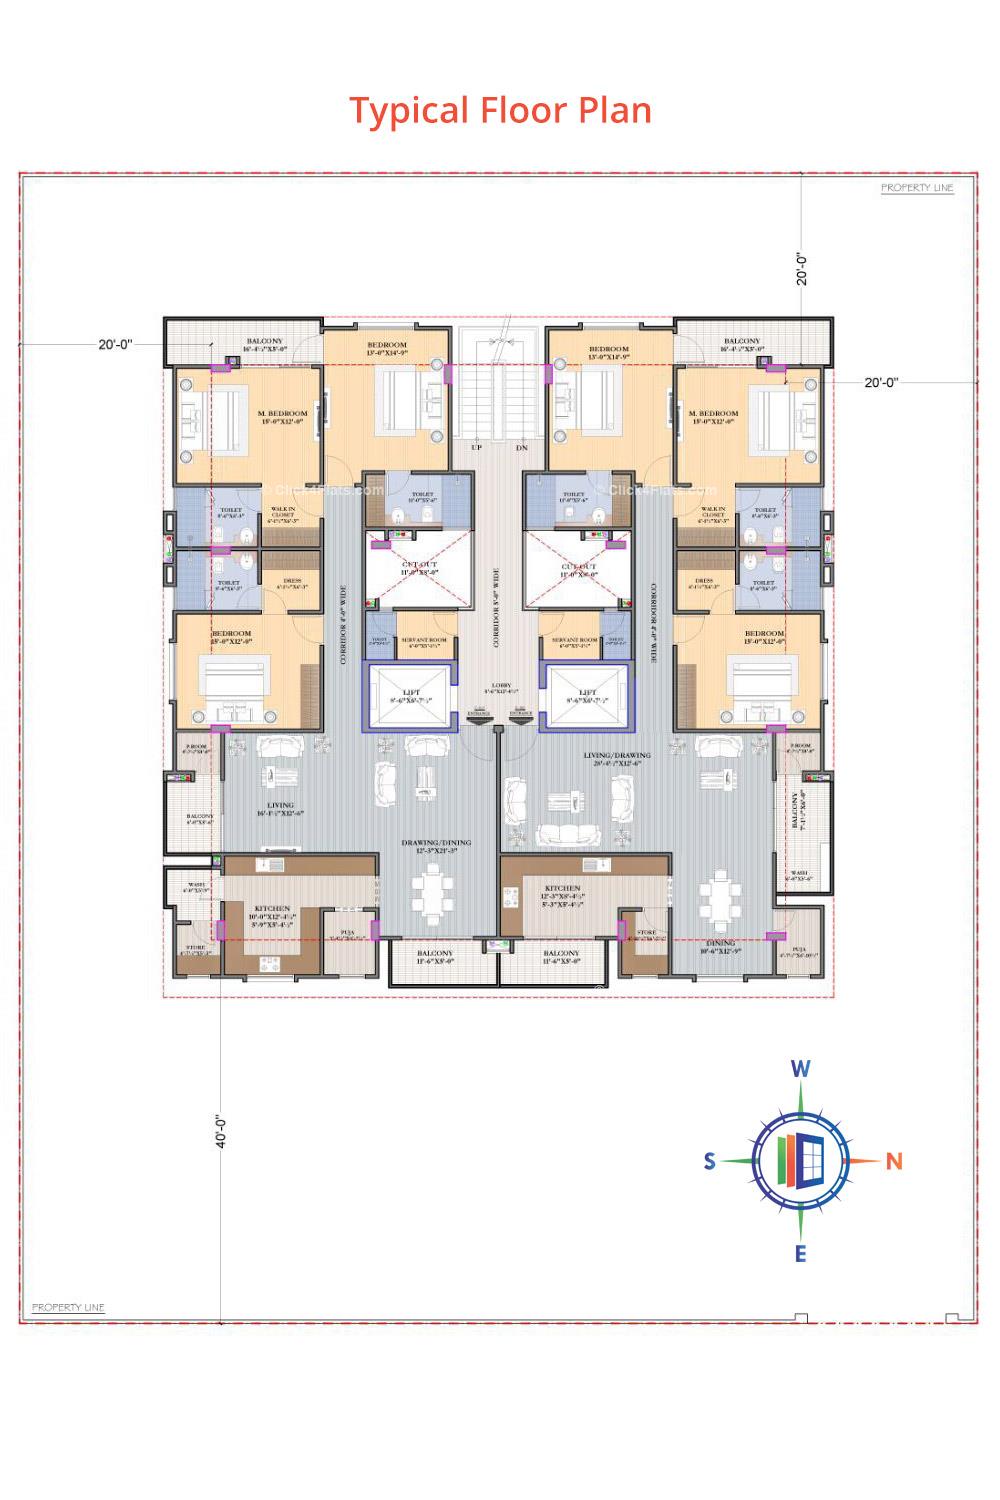 Satya Palace Typical Floor Plan